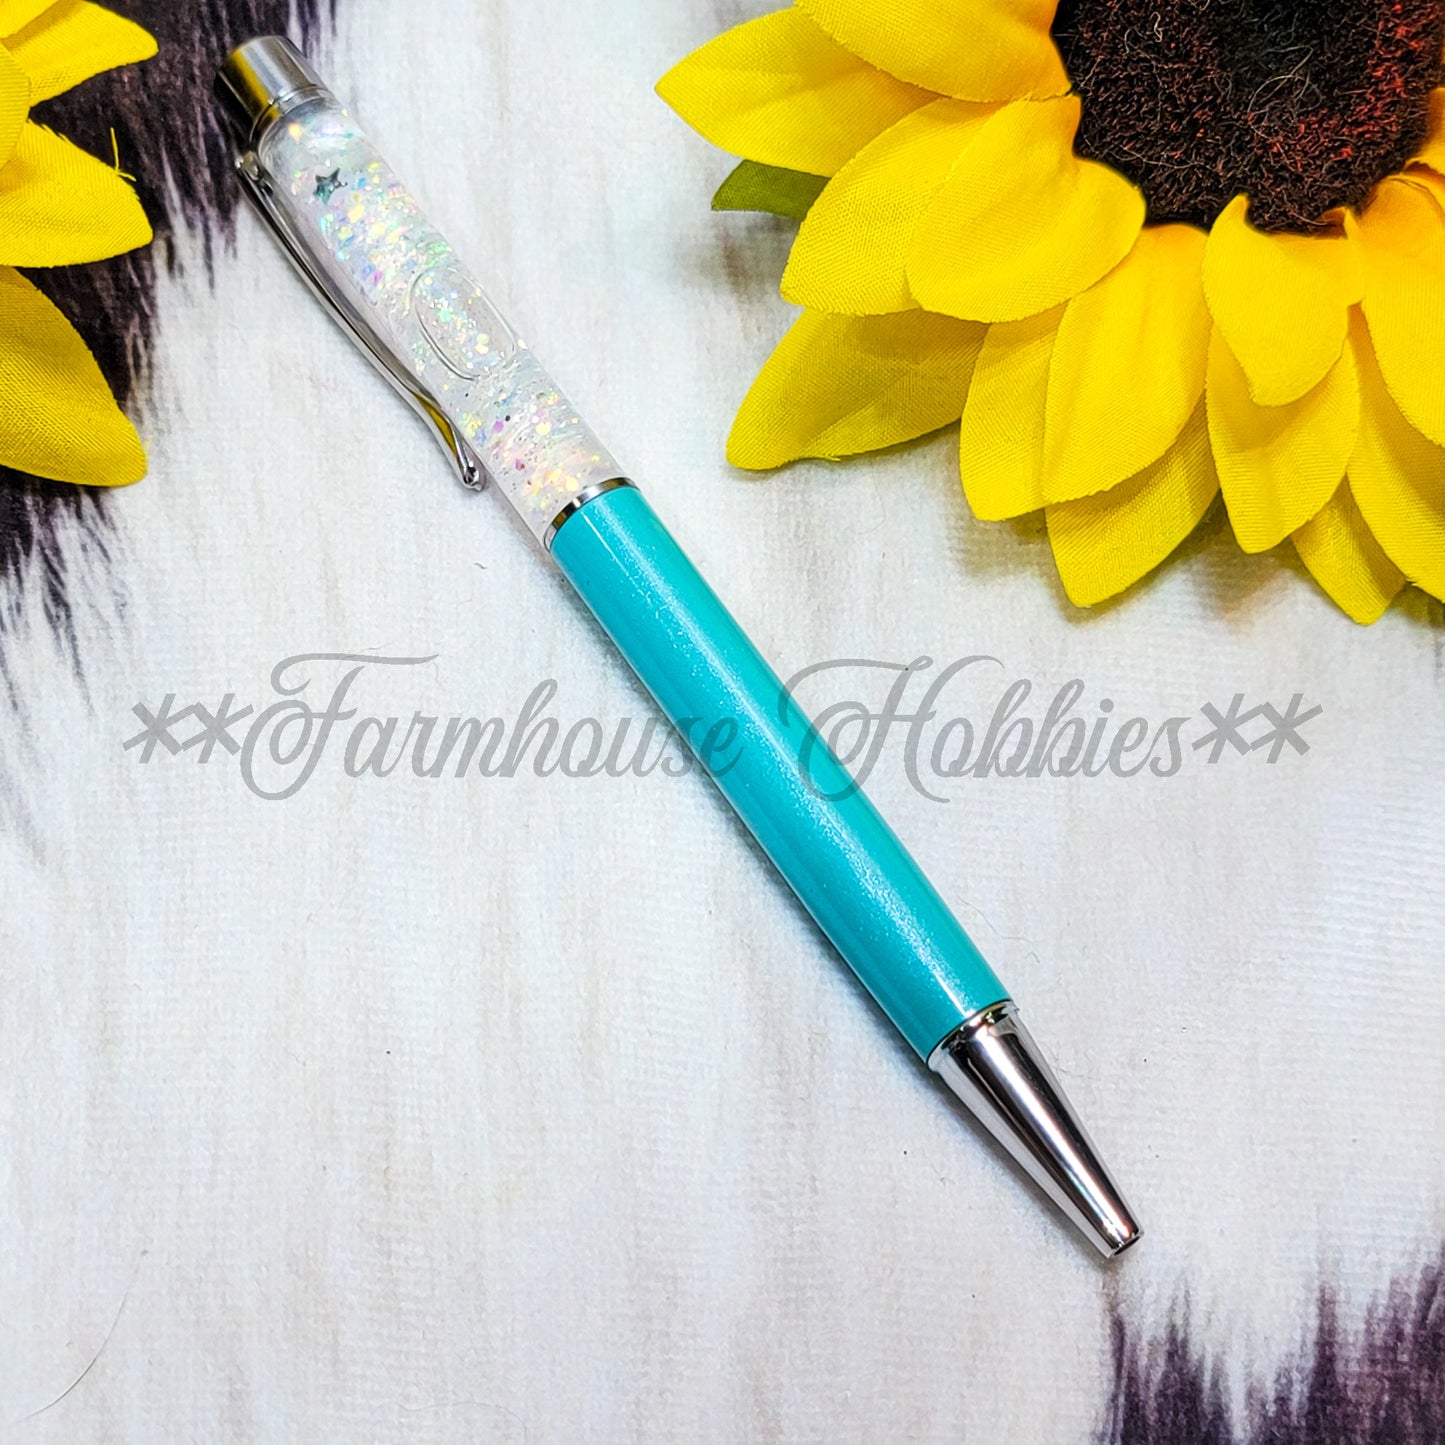 Teal/White Glitter Flow Pen Home Decor/Accessories Farmhouse Hobbies   